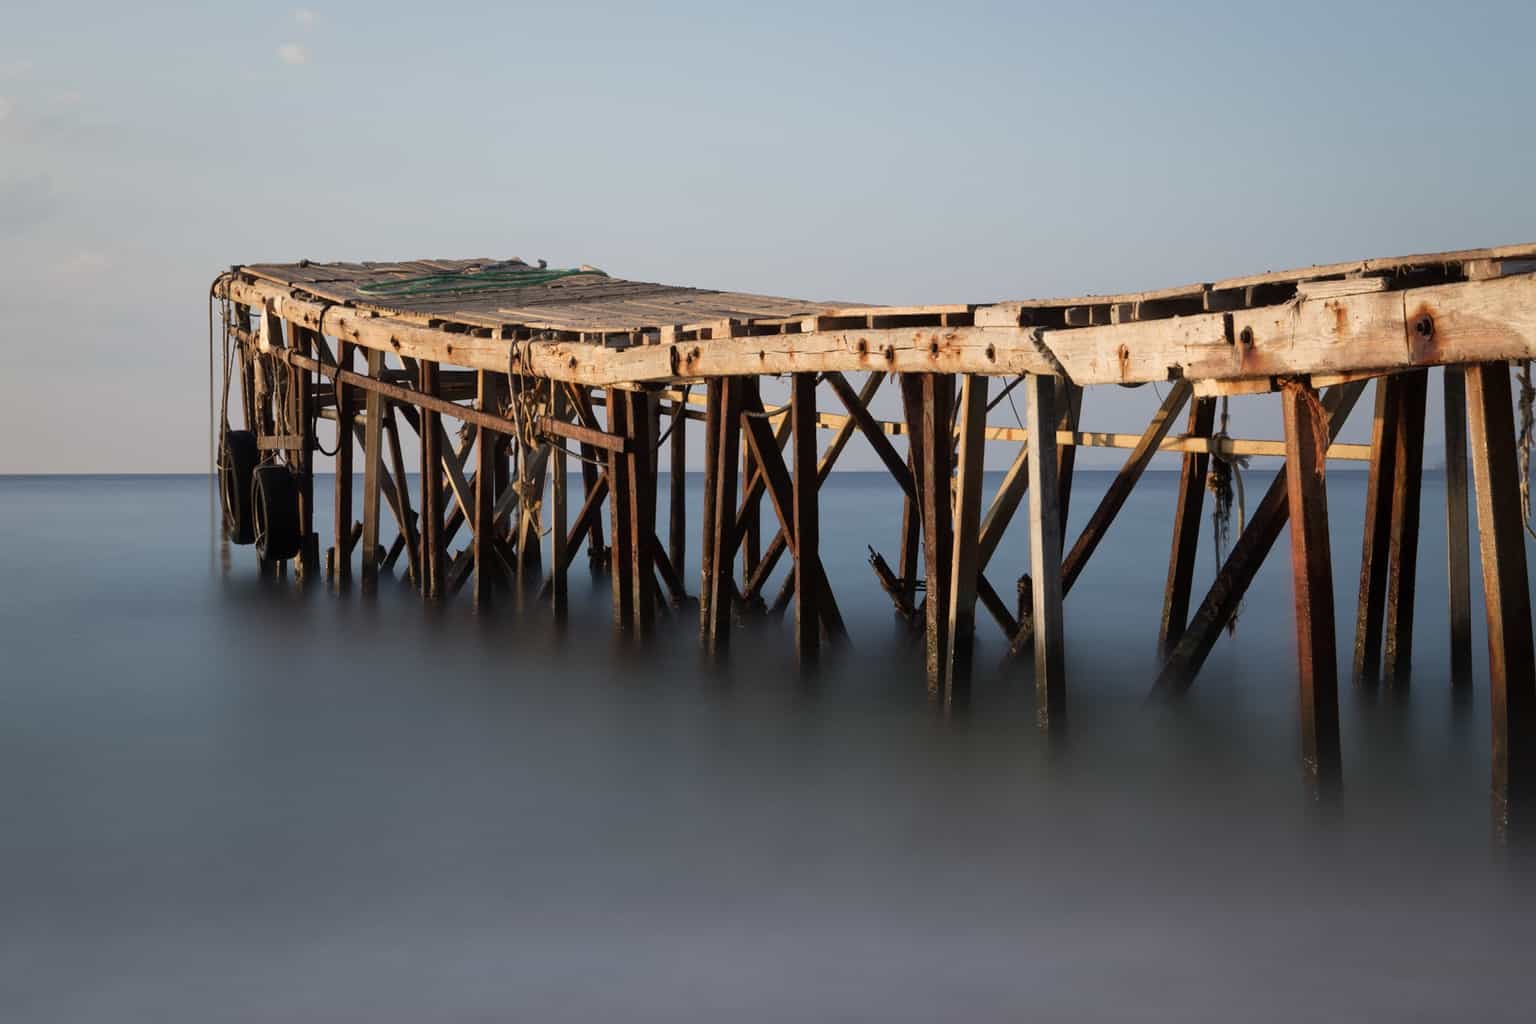  Picture of the wooden jetty, Nissaki Beach, Corfu, Greece 